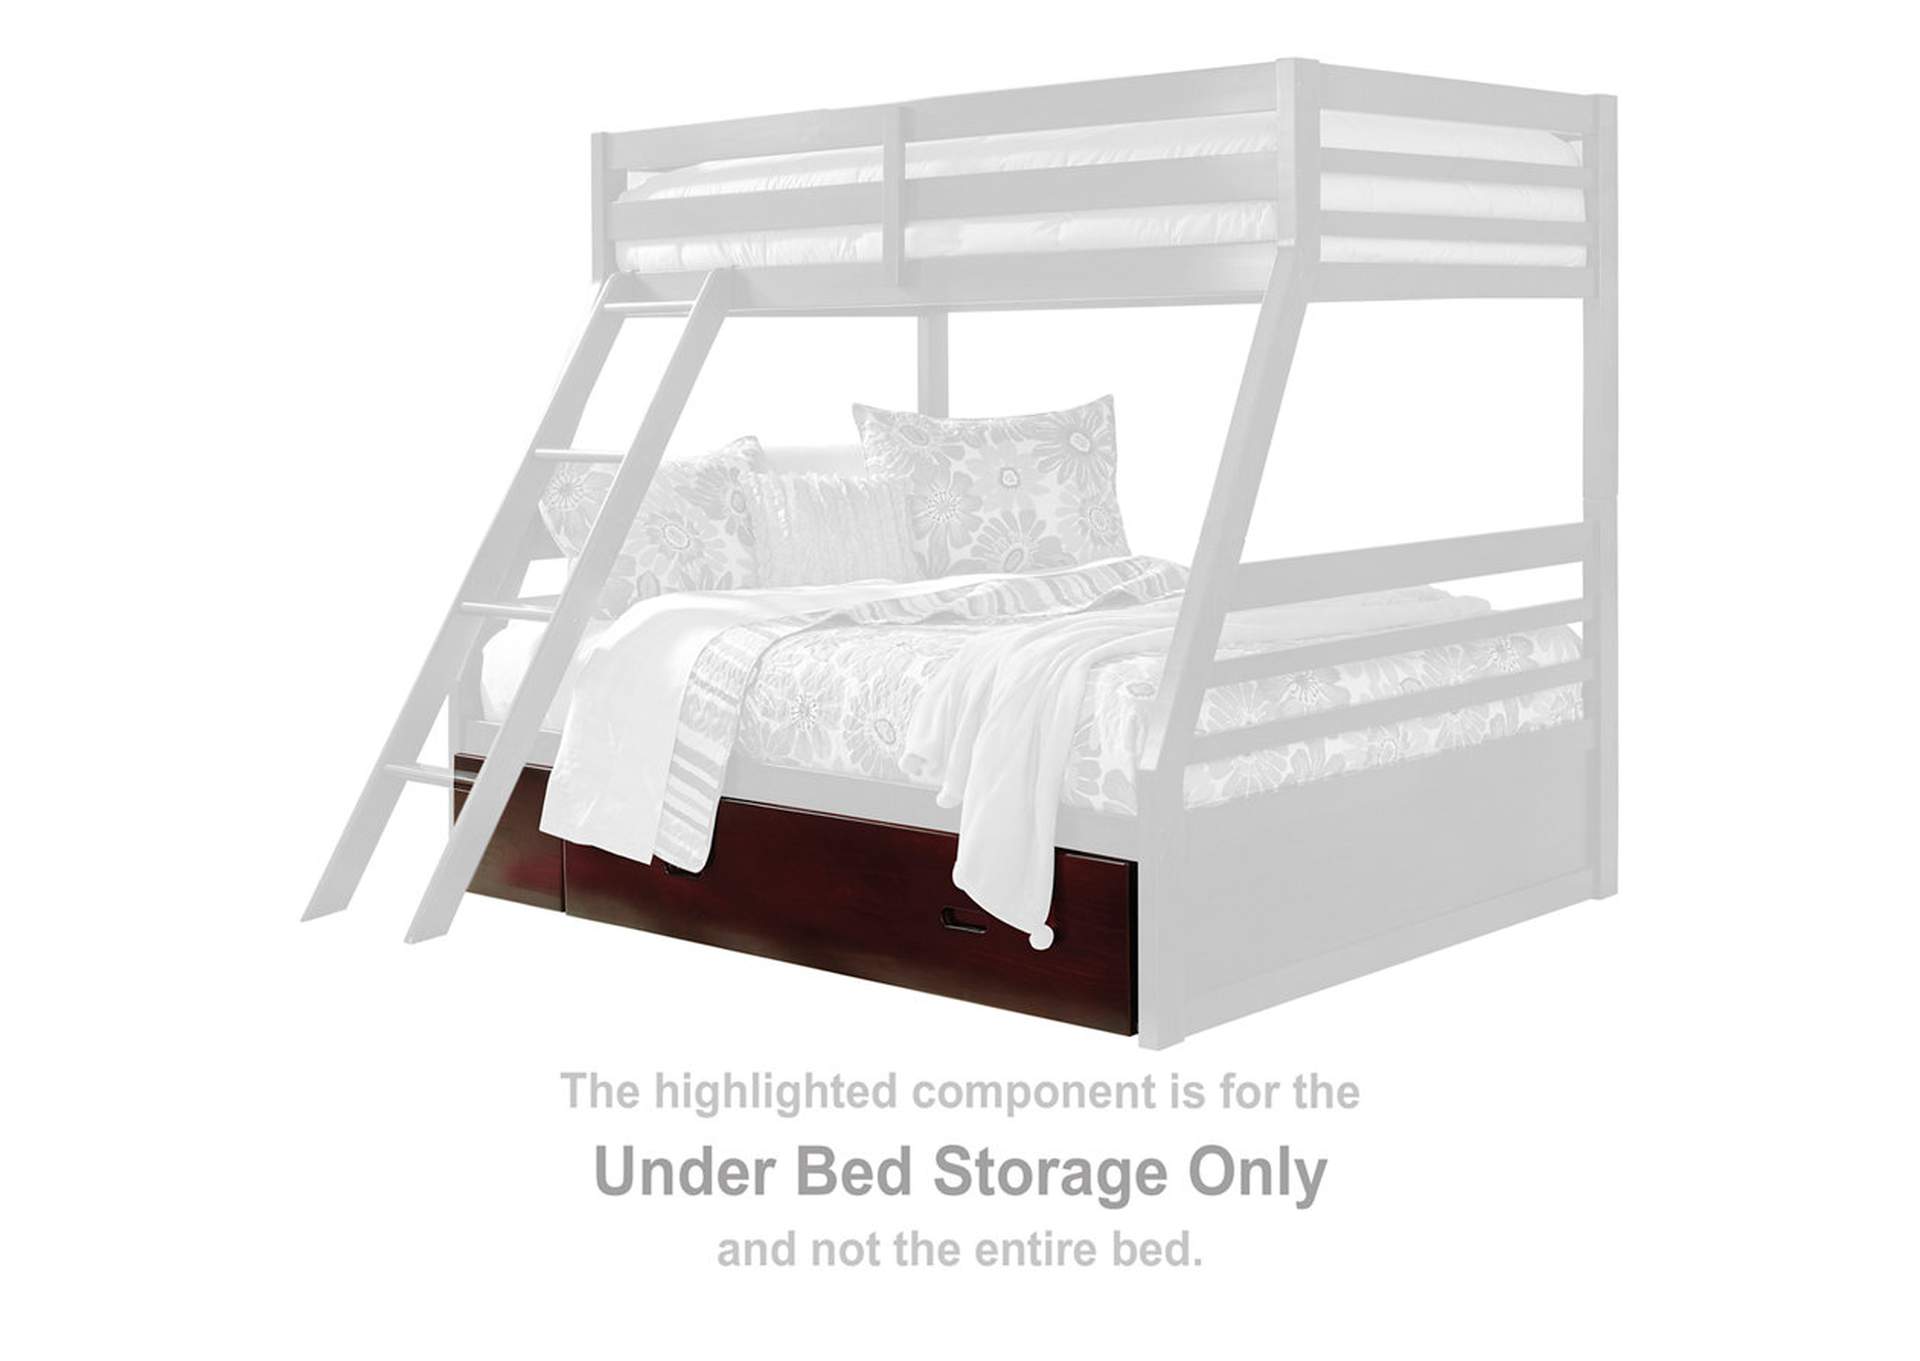 Halanton Under Bed Storage,Signature Design By Ashley